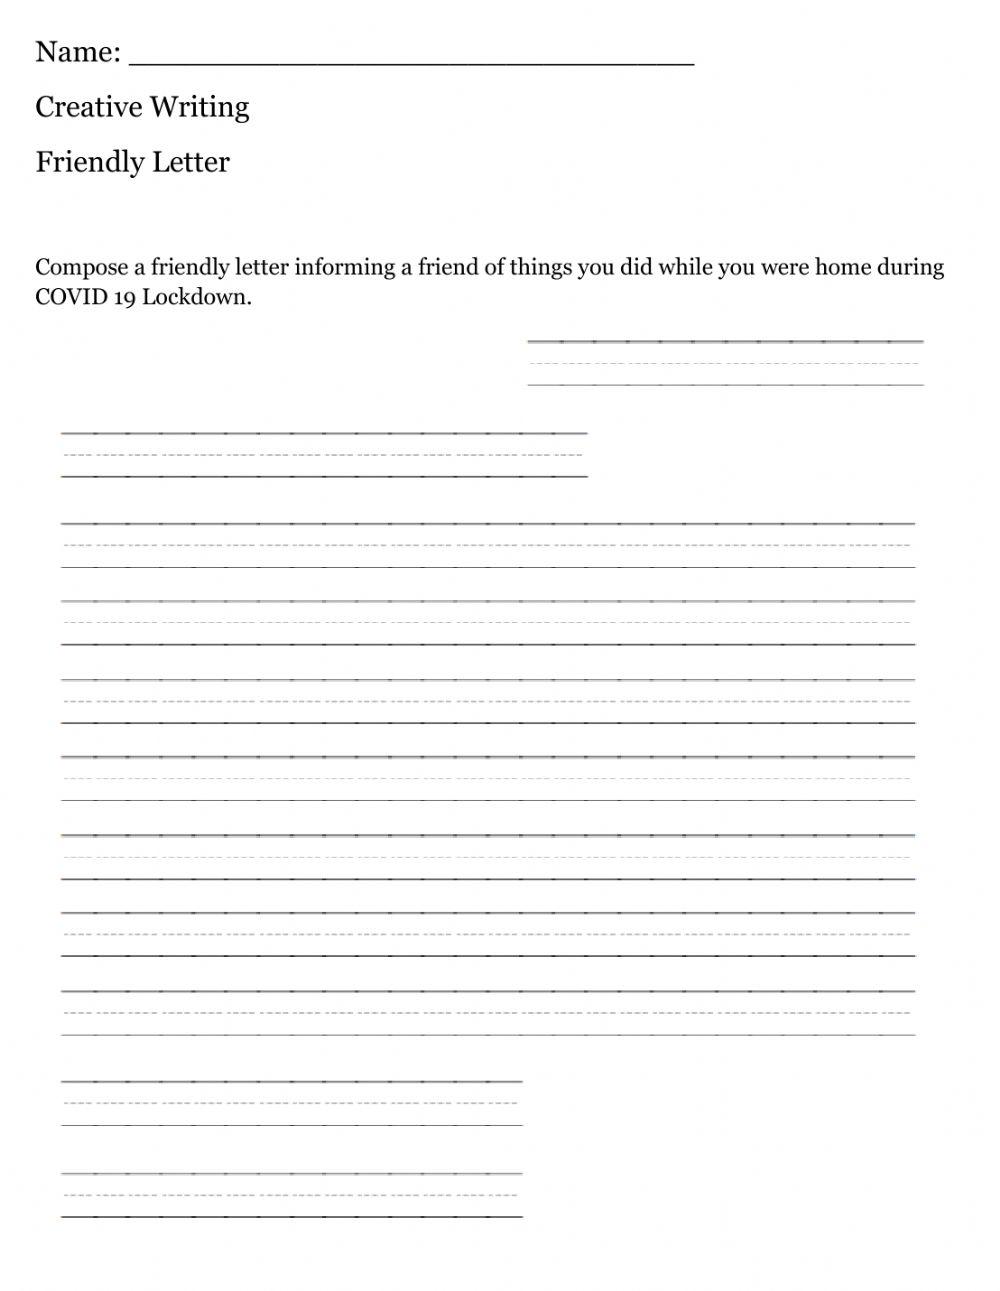 Friendly Letter